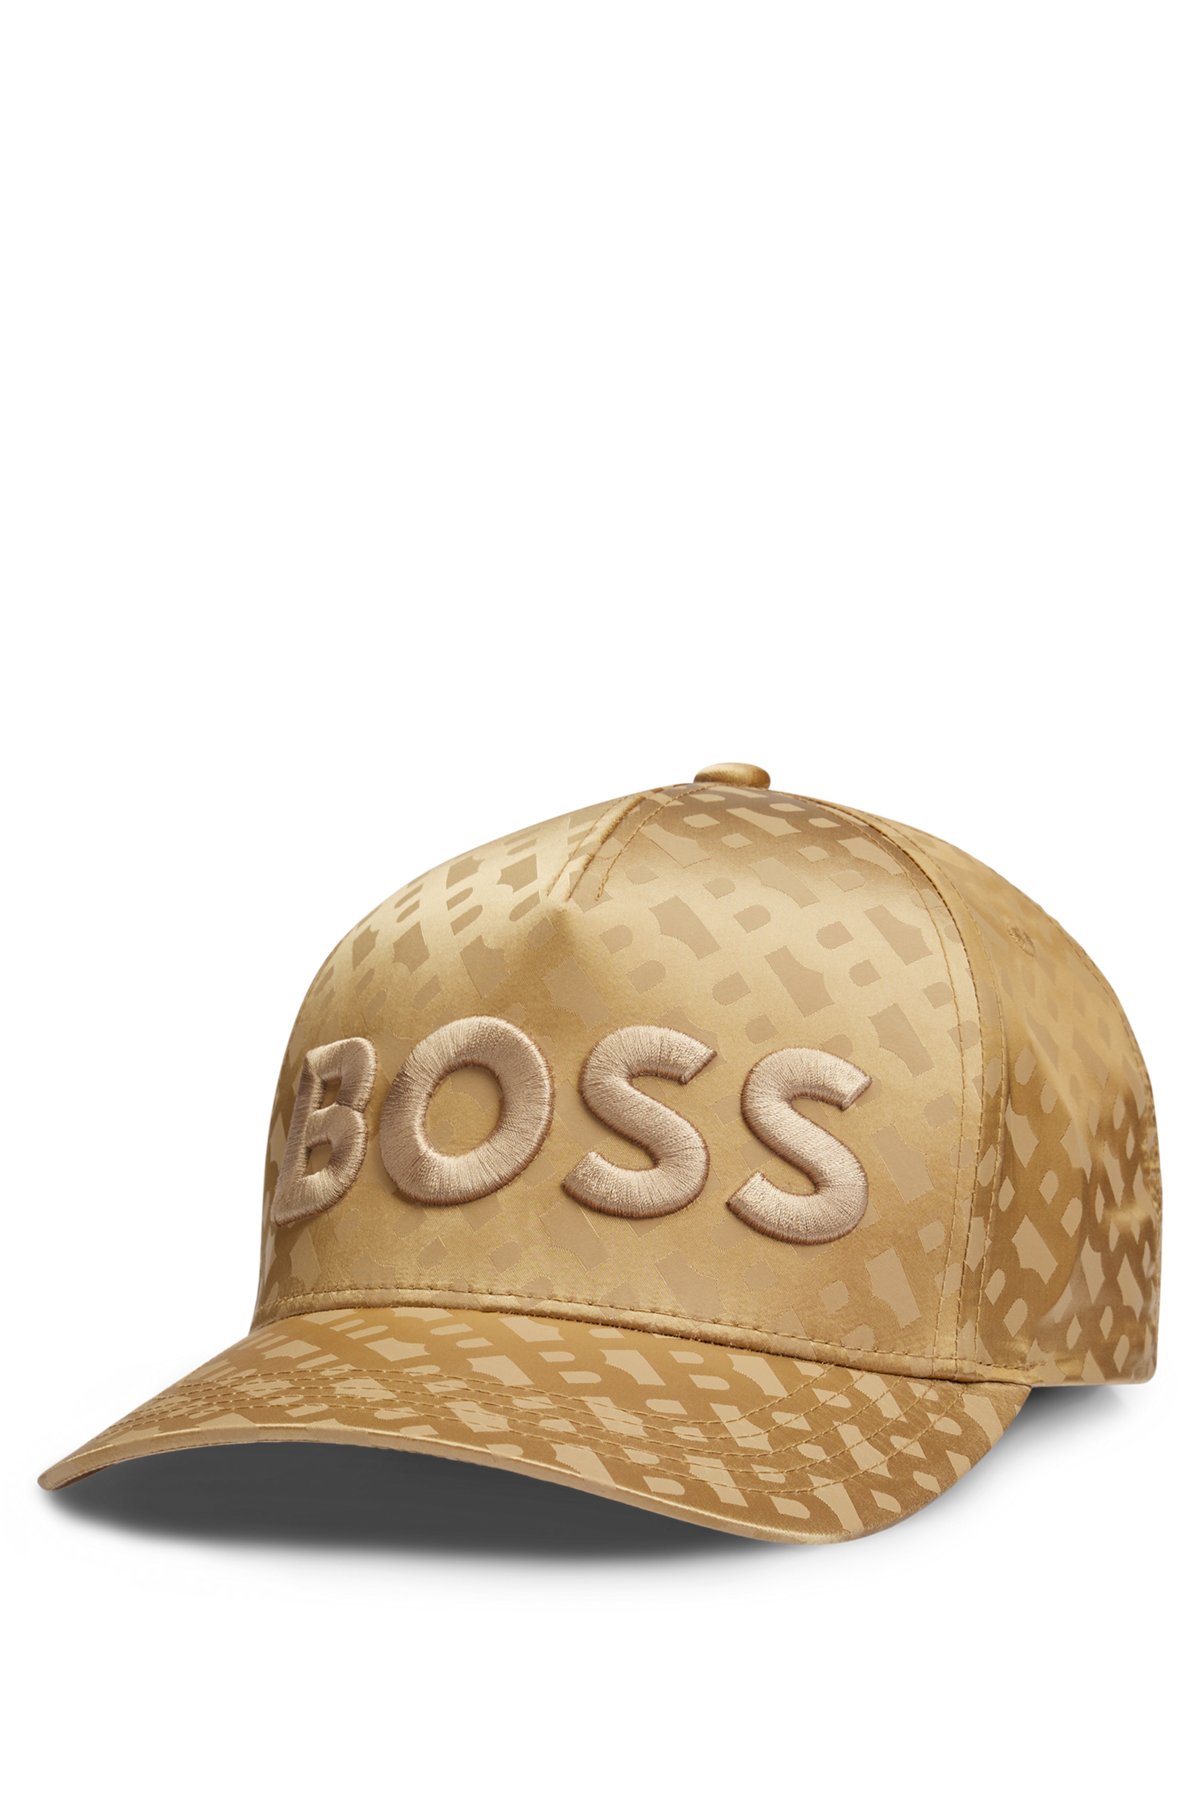 BOSS - Monogram-jacquard cap with oversize logo